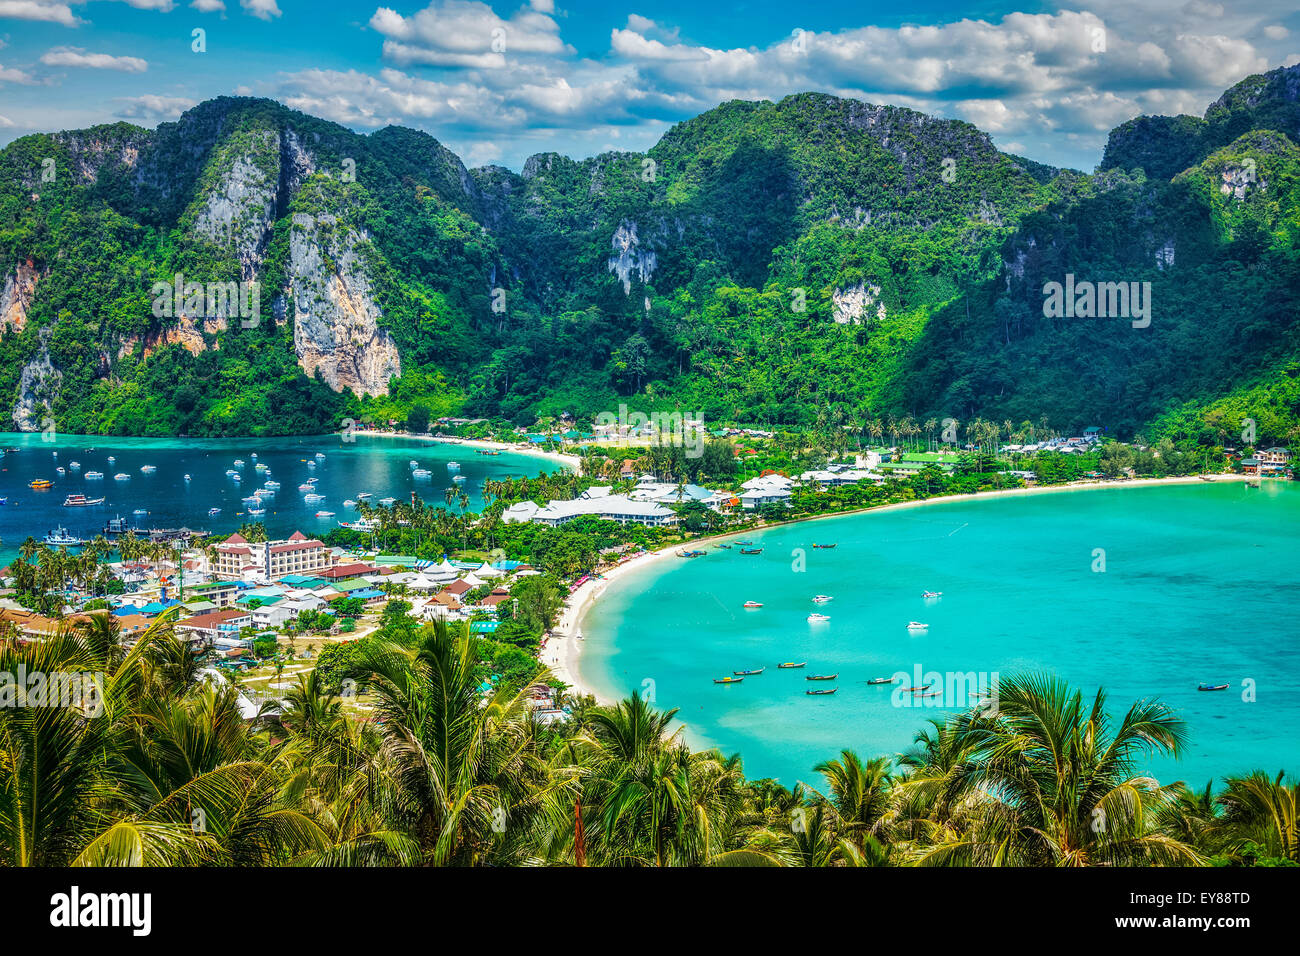 Travel vacation background - Tropical island with resorts - Phi-Phi island, Krabi Province, Thailand Stock Photo